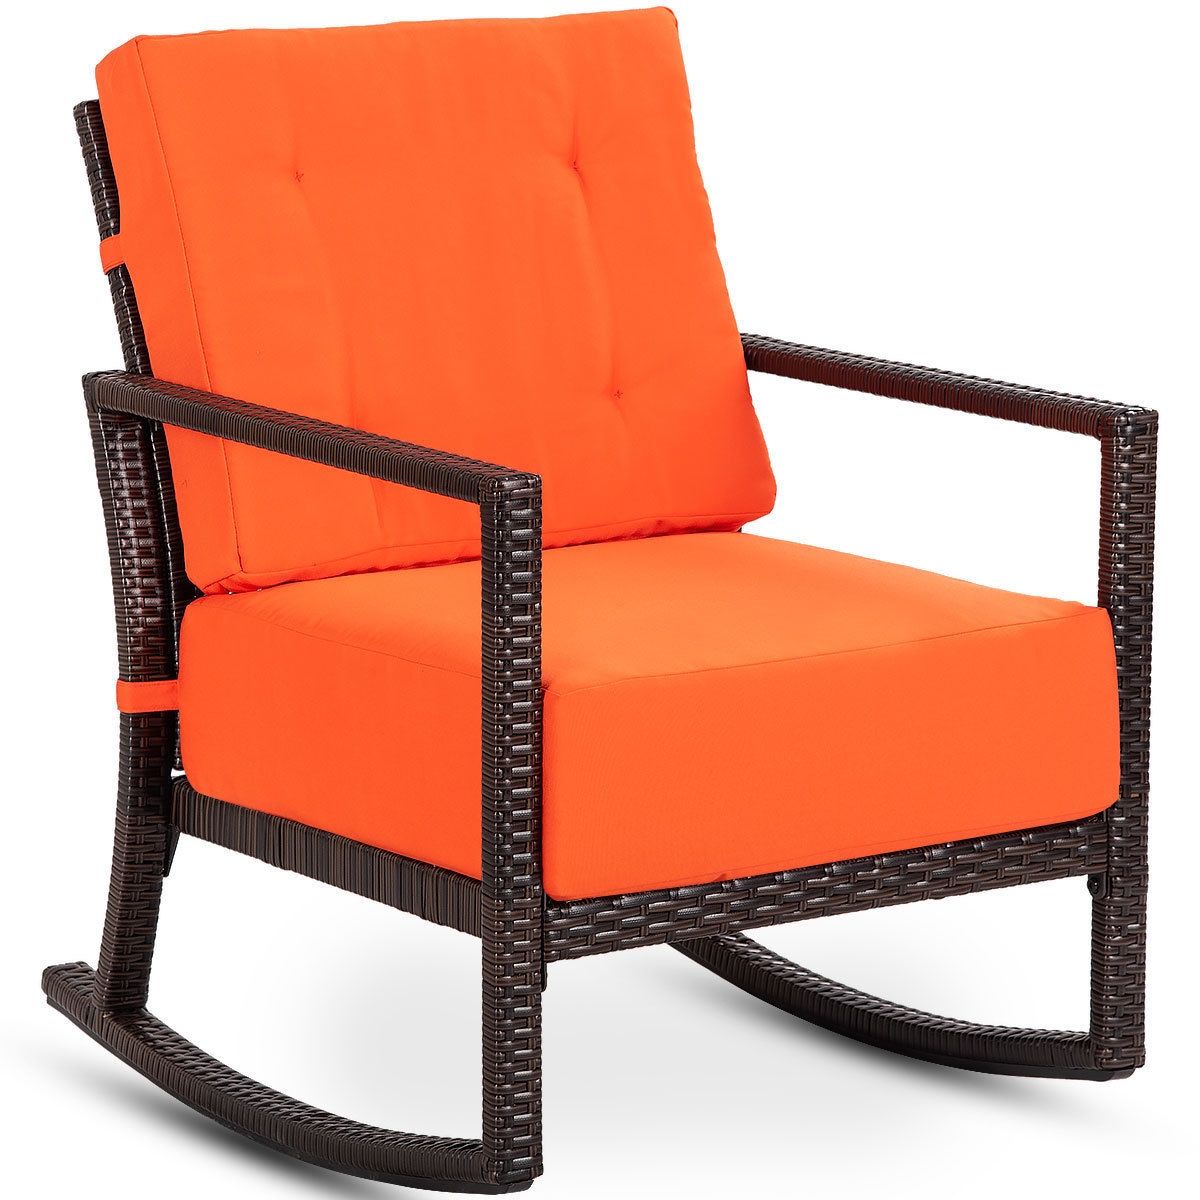 Solid Wood Rocking Chair Porch Rocker Indoor Outdoor Deck Patio Backyard Red Swing Chair Patio Garden Furniture